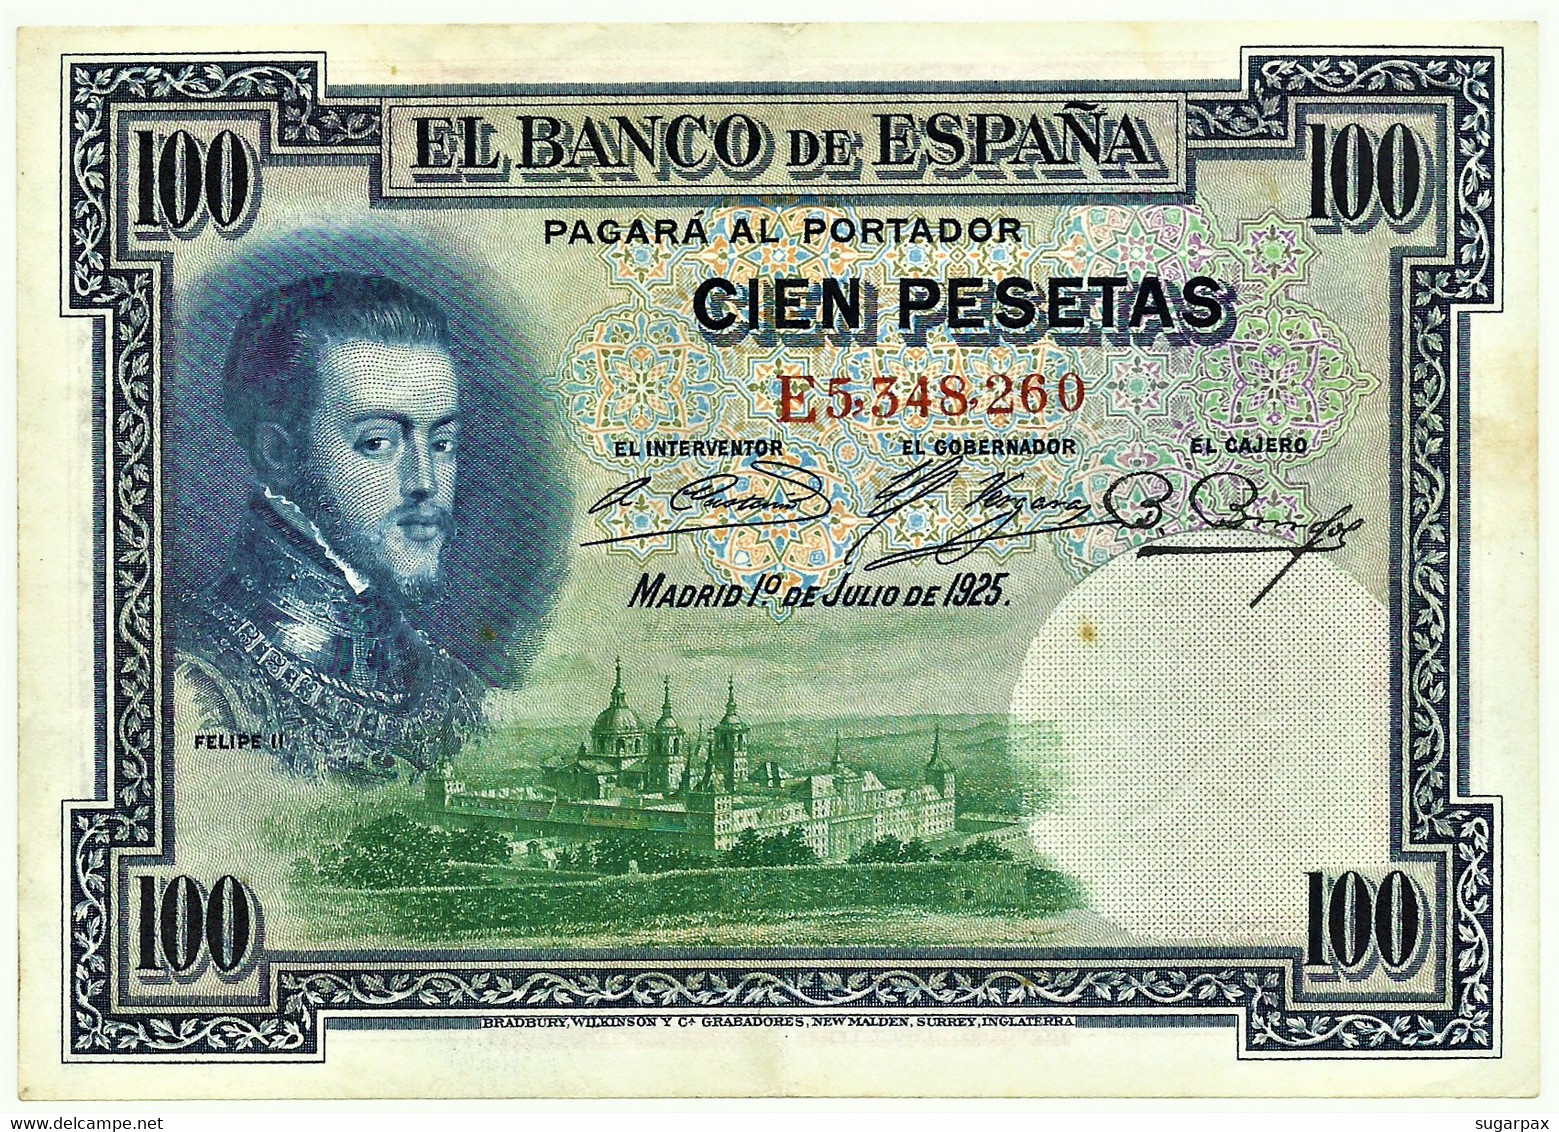 ESPAÑA - 100 Pesetas - ND 1936 ( Old Date - 01.07.1925 ) - Pick 69.c - Serie E - Filipe II - II Republica - 100 Peseten